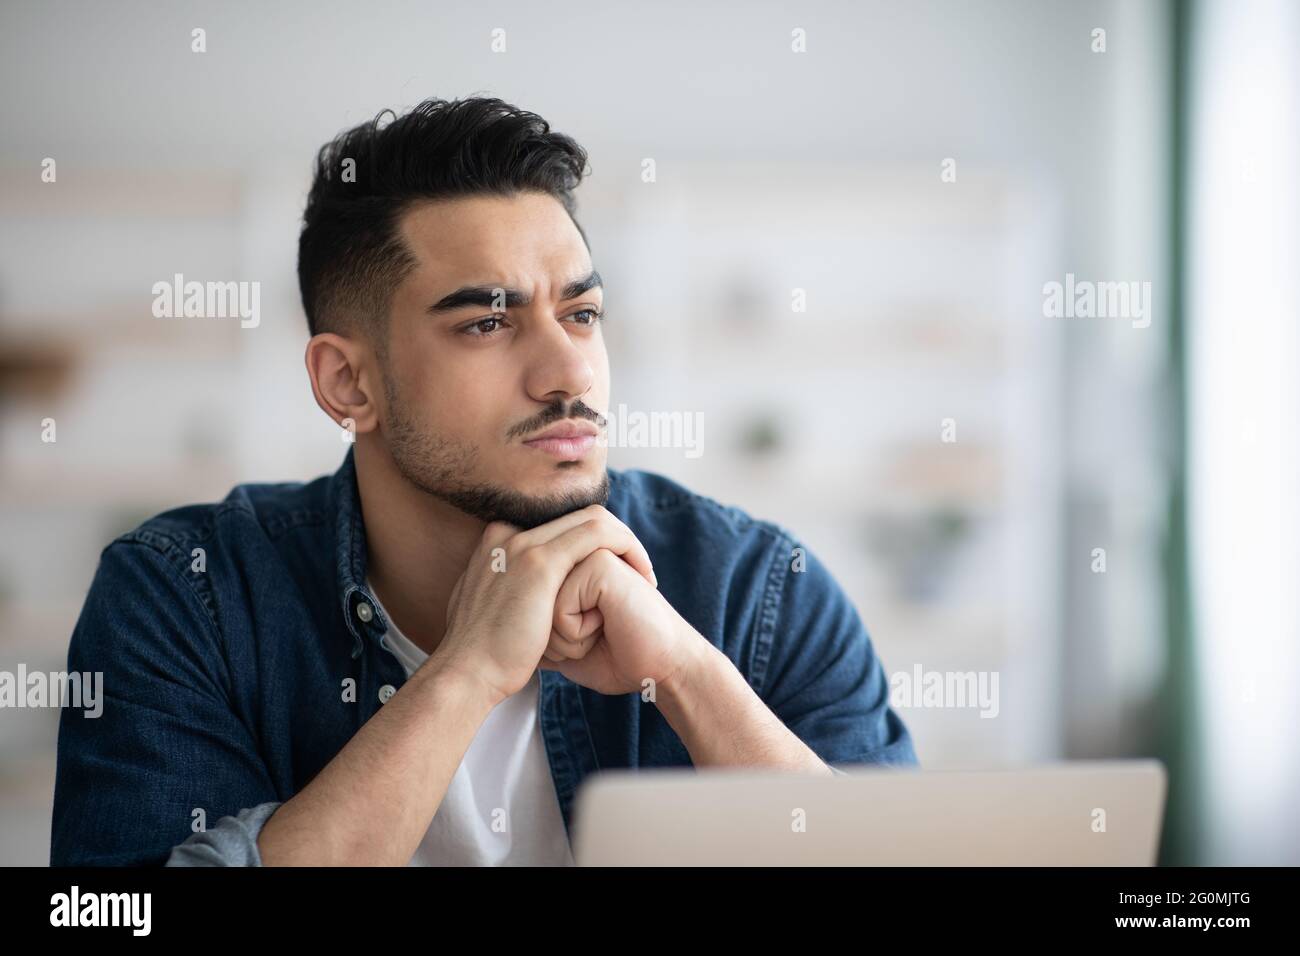 Thoughtful arab man employee working on laptop Stock Photo